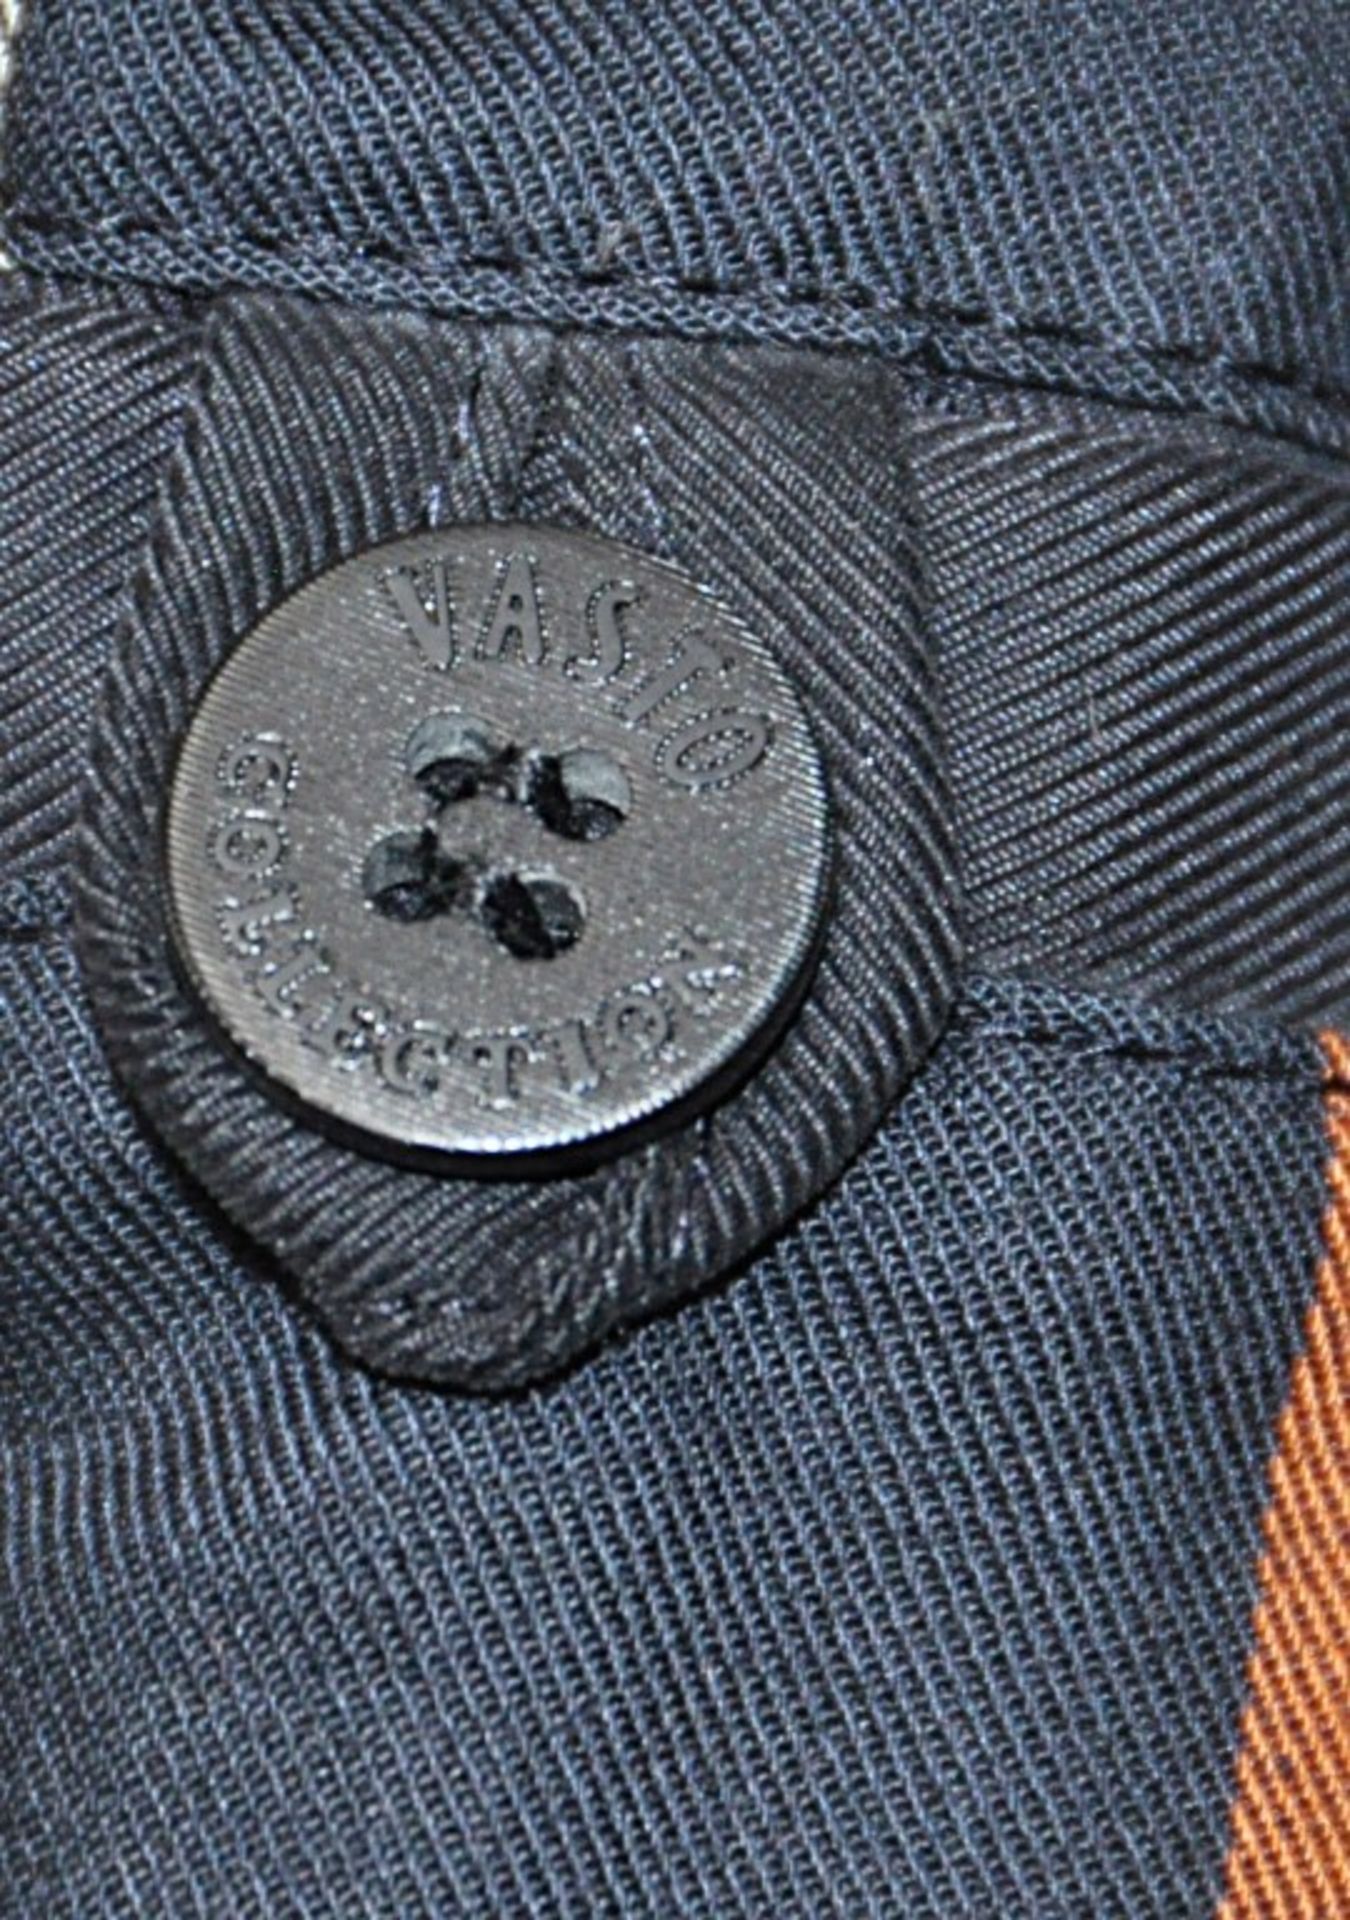 1 x Men's Long Sleeve Casual Jacket By International Luxury Brand "Vasto" (BAJ72241) – Size: Small – - Image 5 of 6